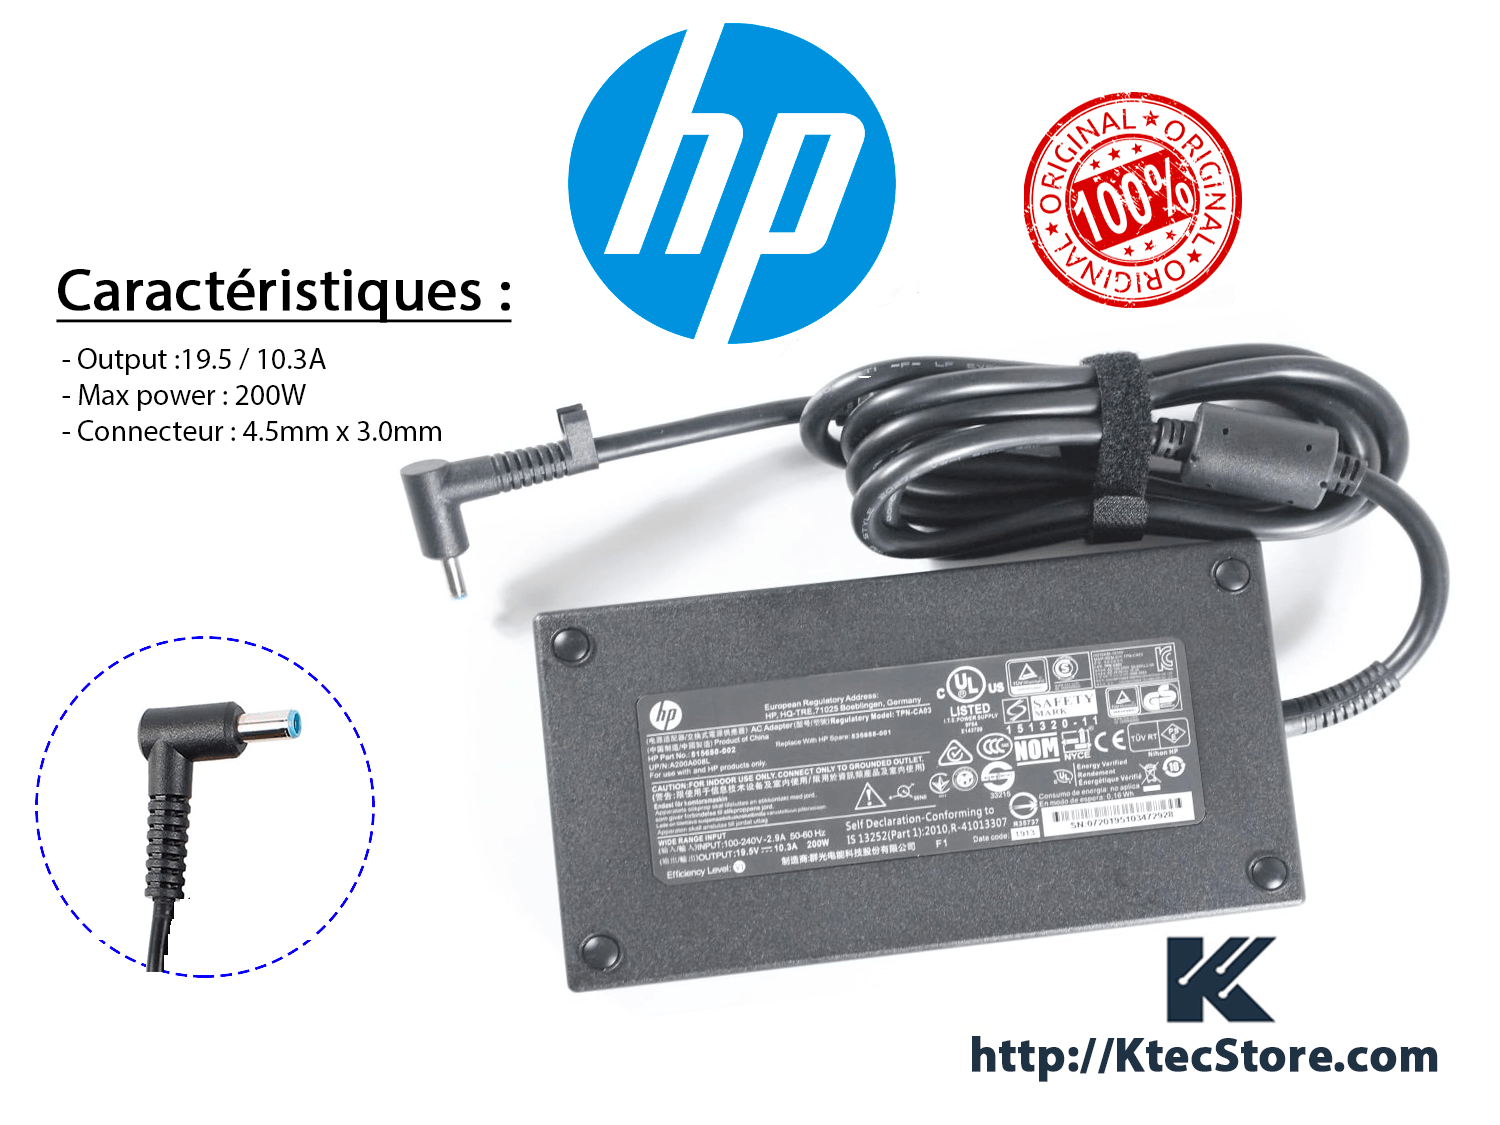 Chargeur HP 200W ORIGINAL 19.5V / 10.3A Fiche Bleu 4.5mm x 3.0mm - KtecStore